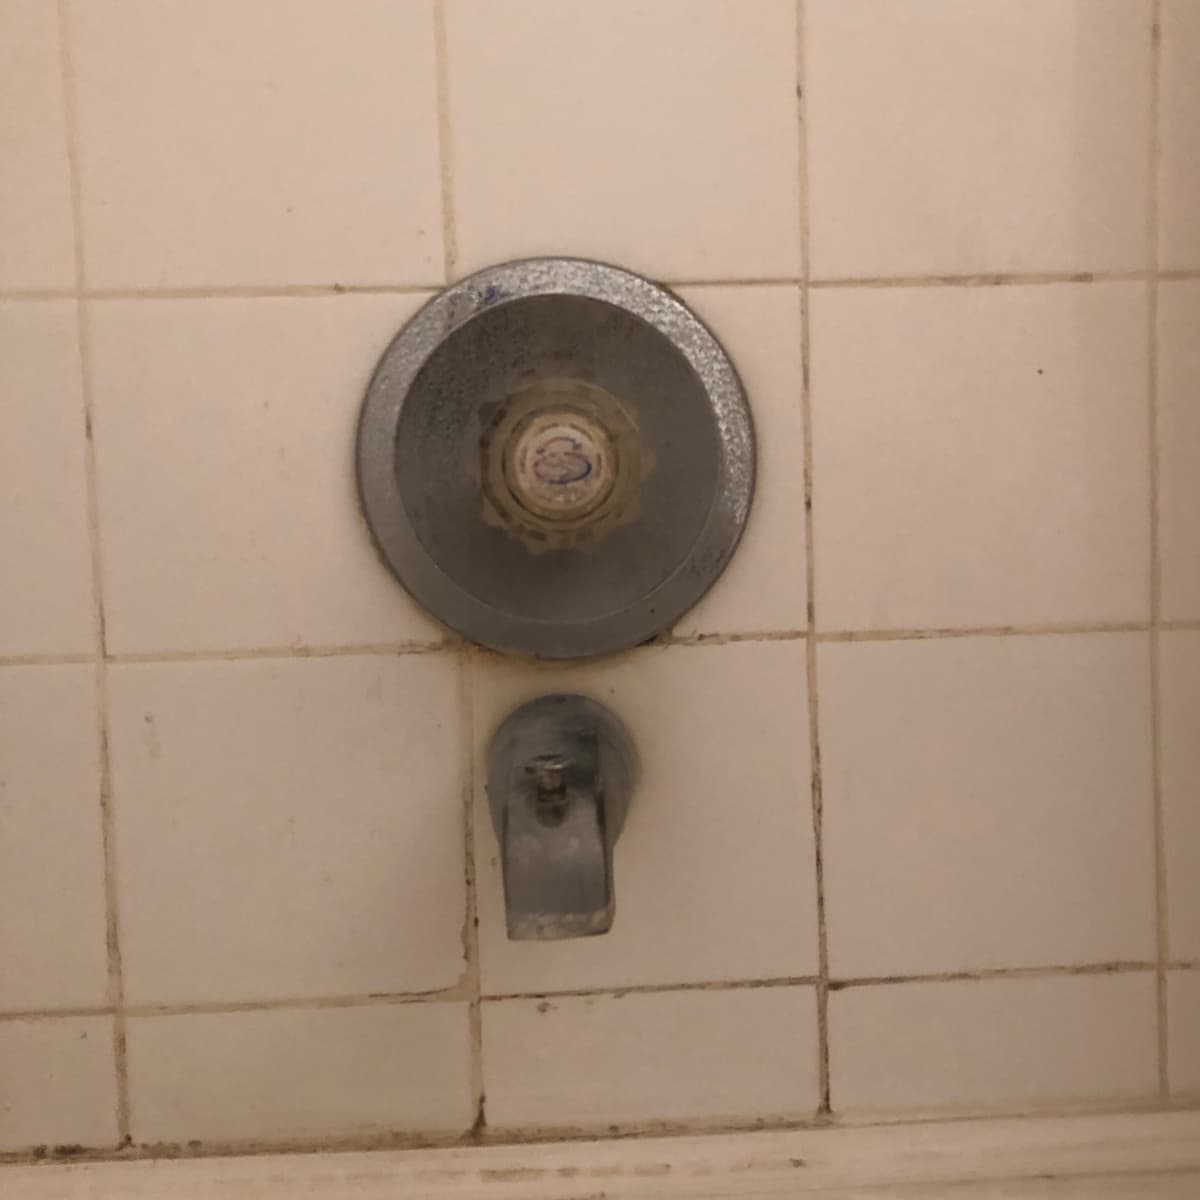 Replace A Single Handle Shower Valve, How To Remove A Broken Bathtub Faucet Stem